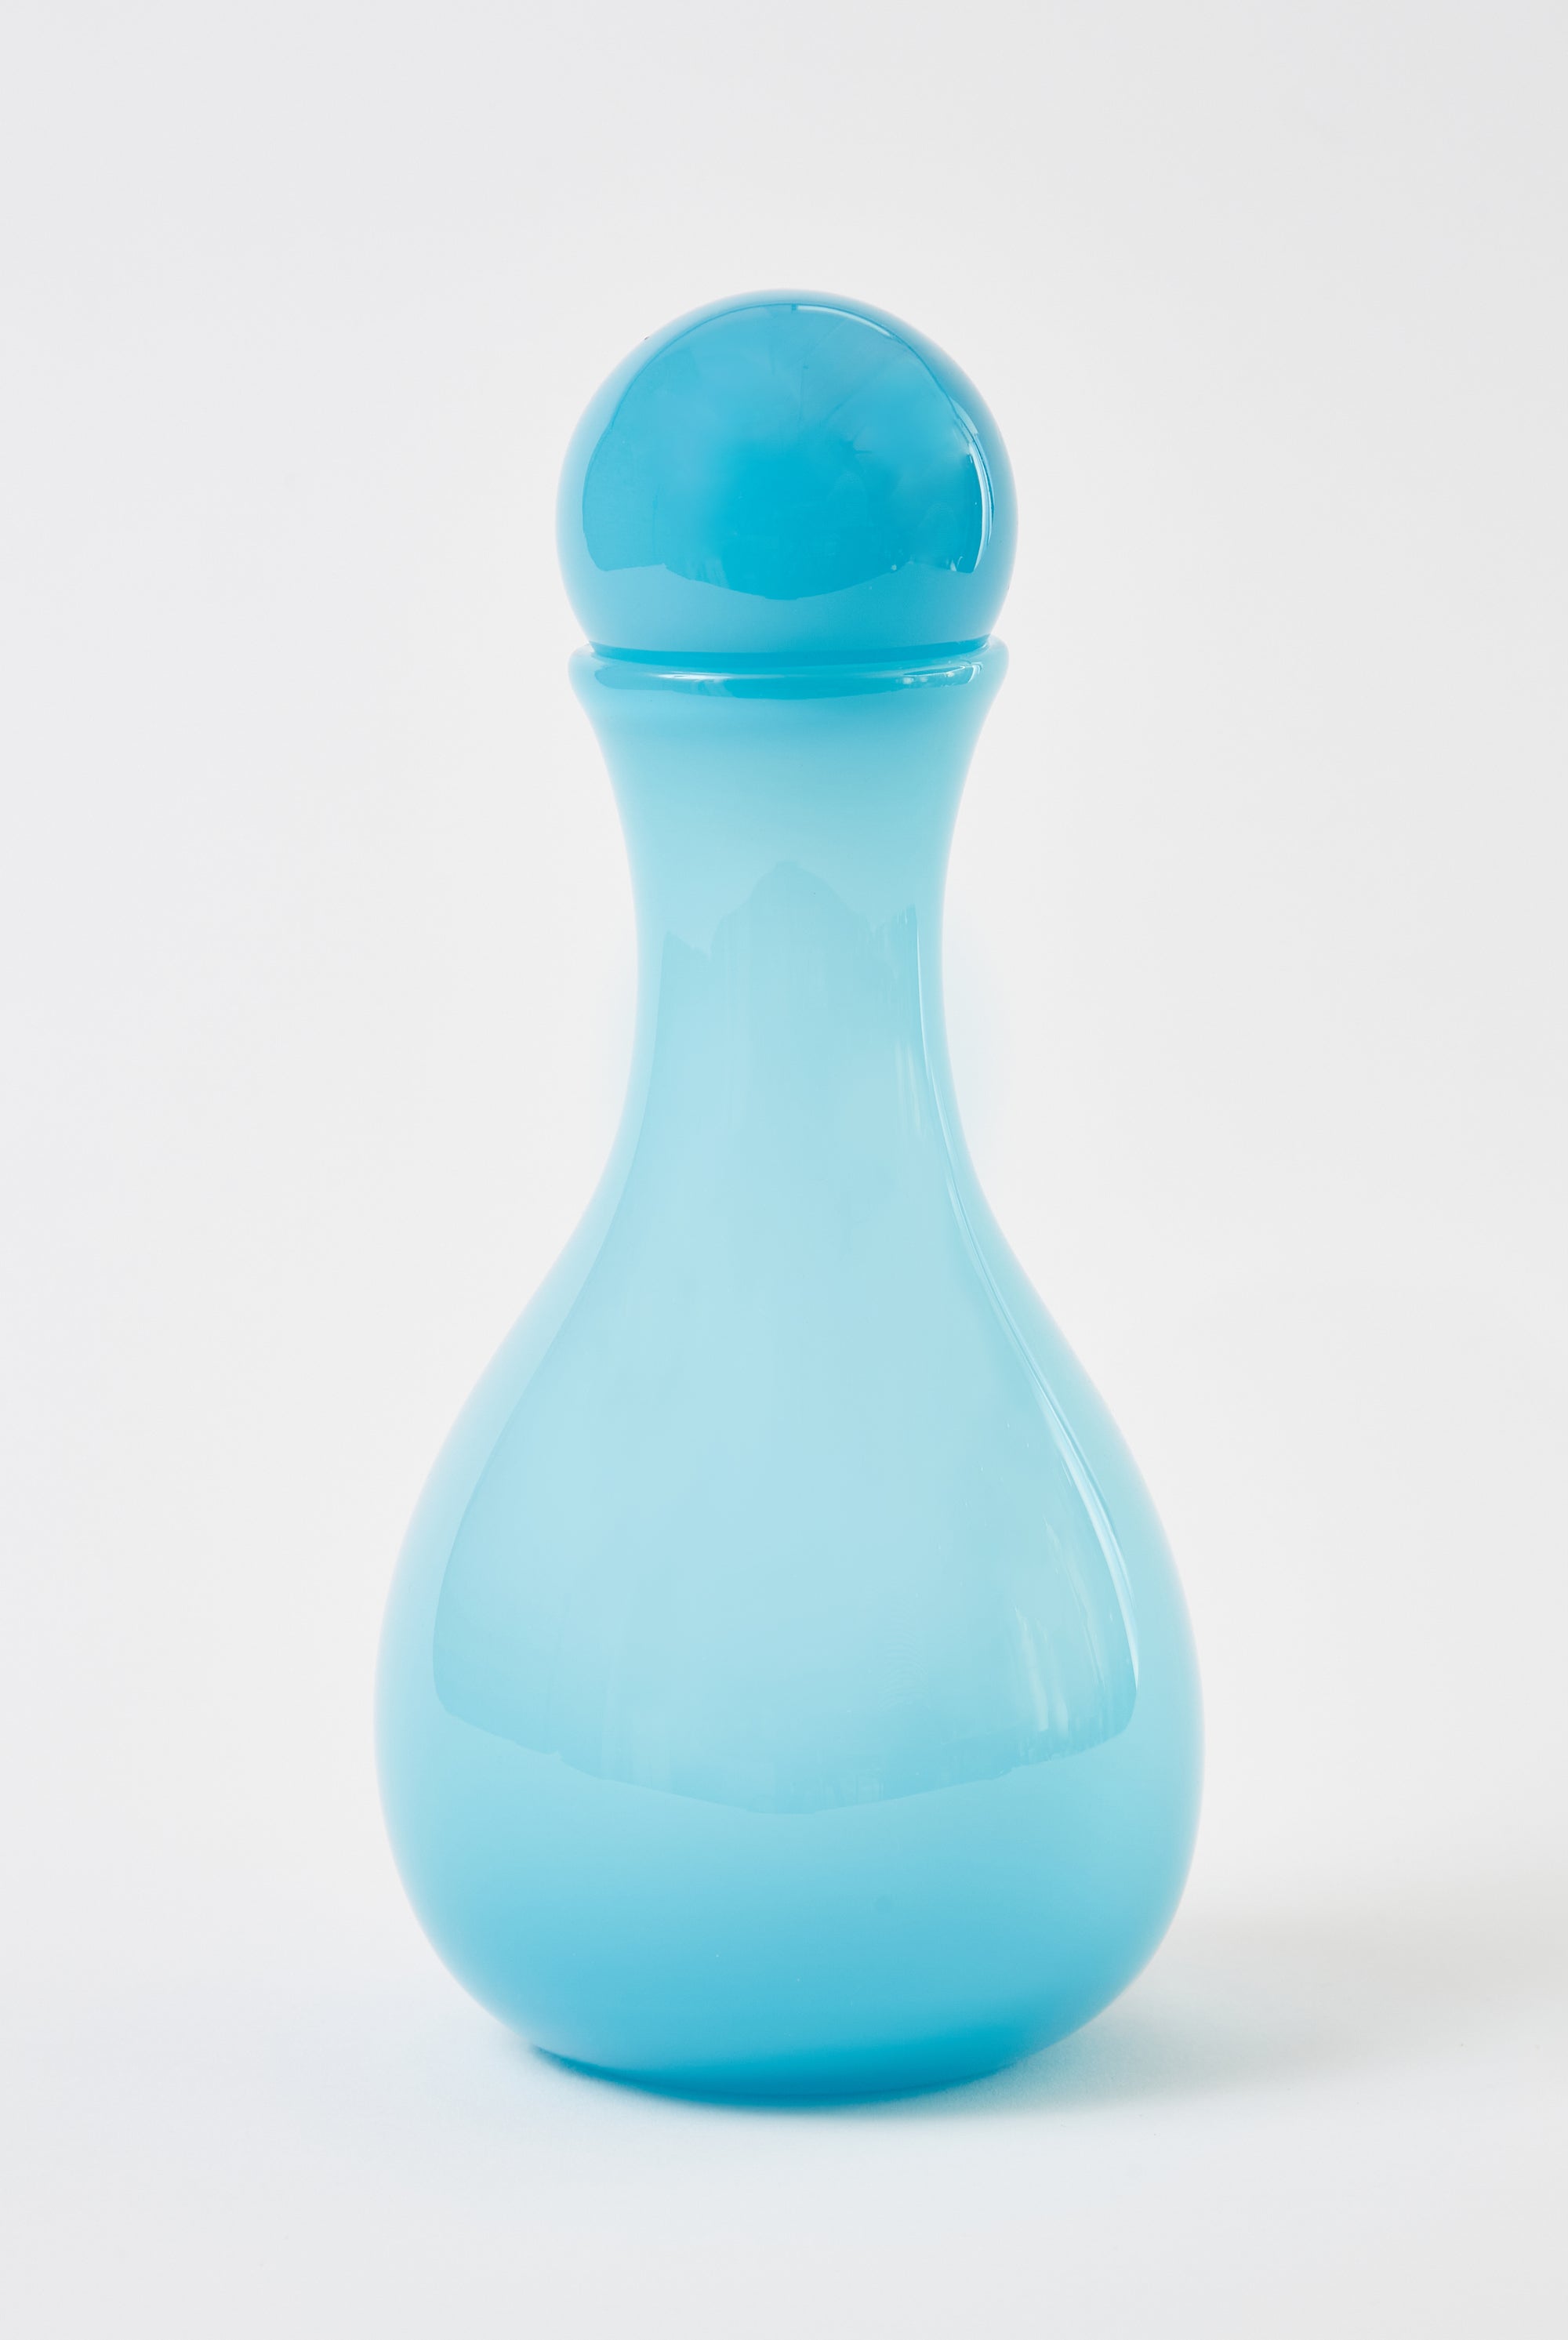 Michael Anchin Aquamarine Vase with Ball